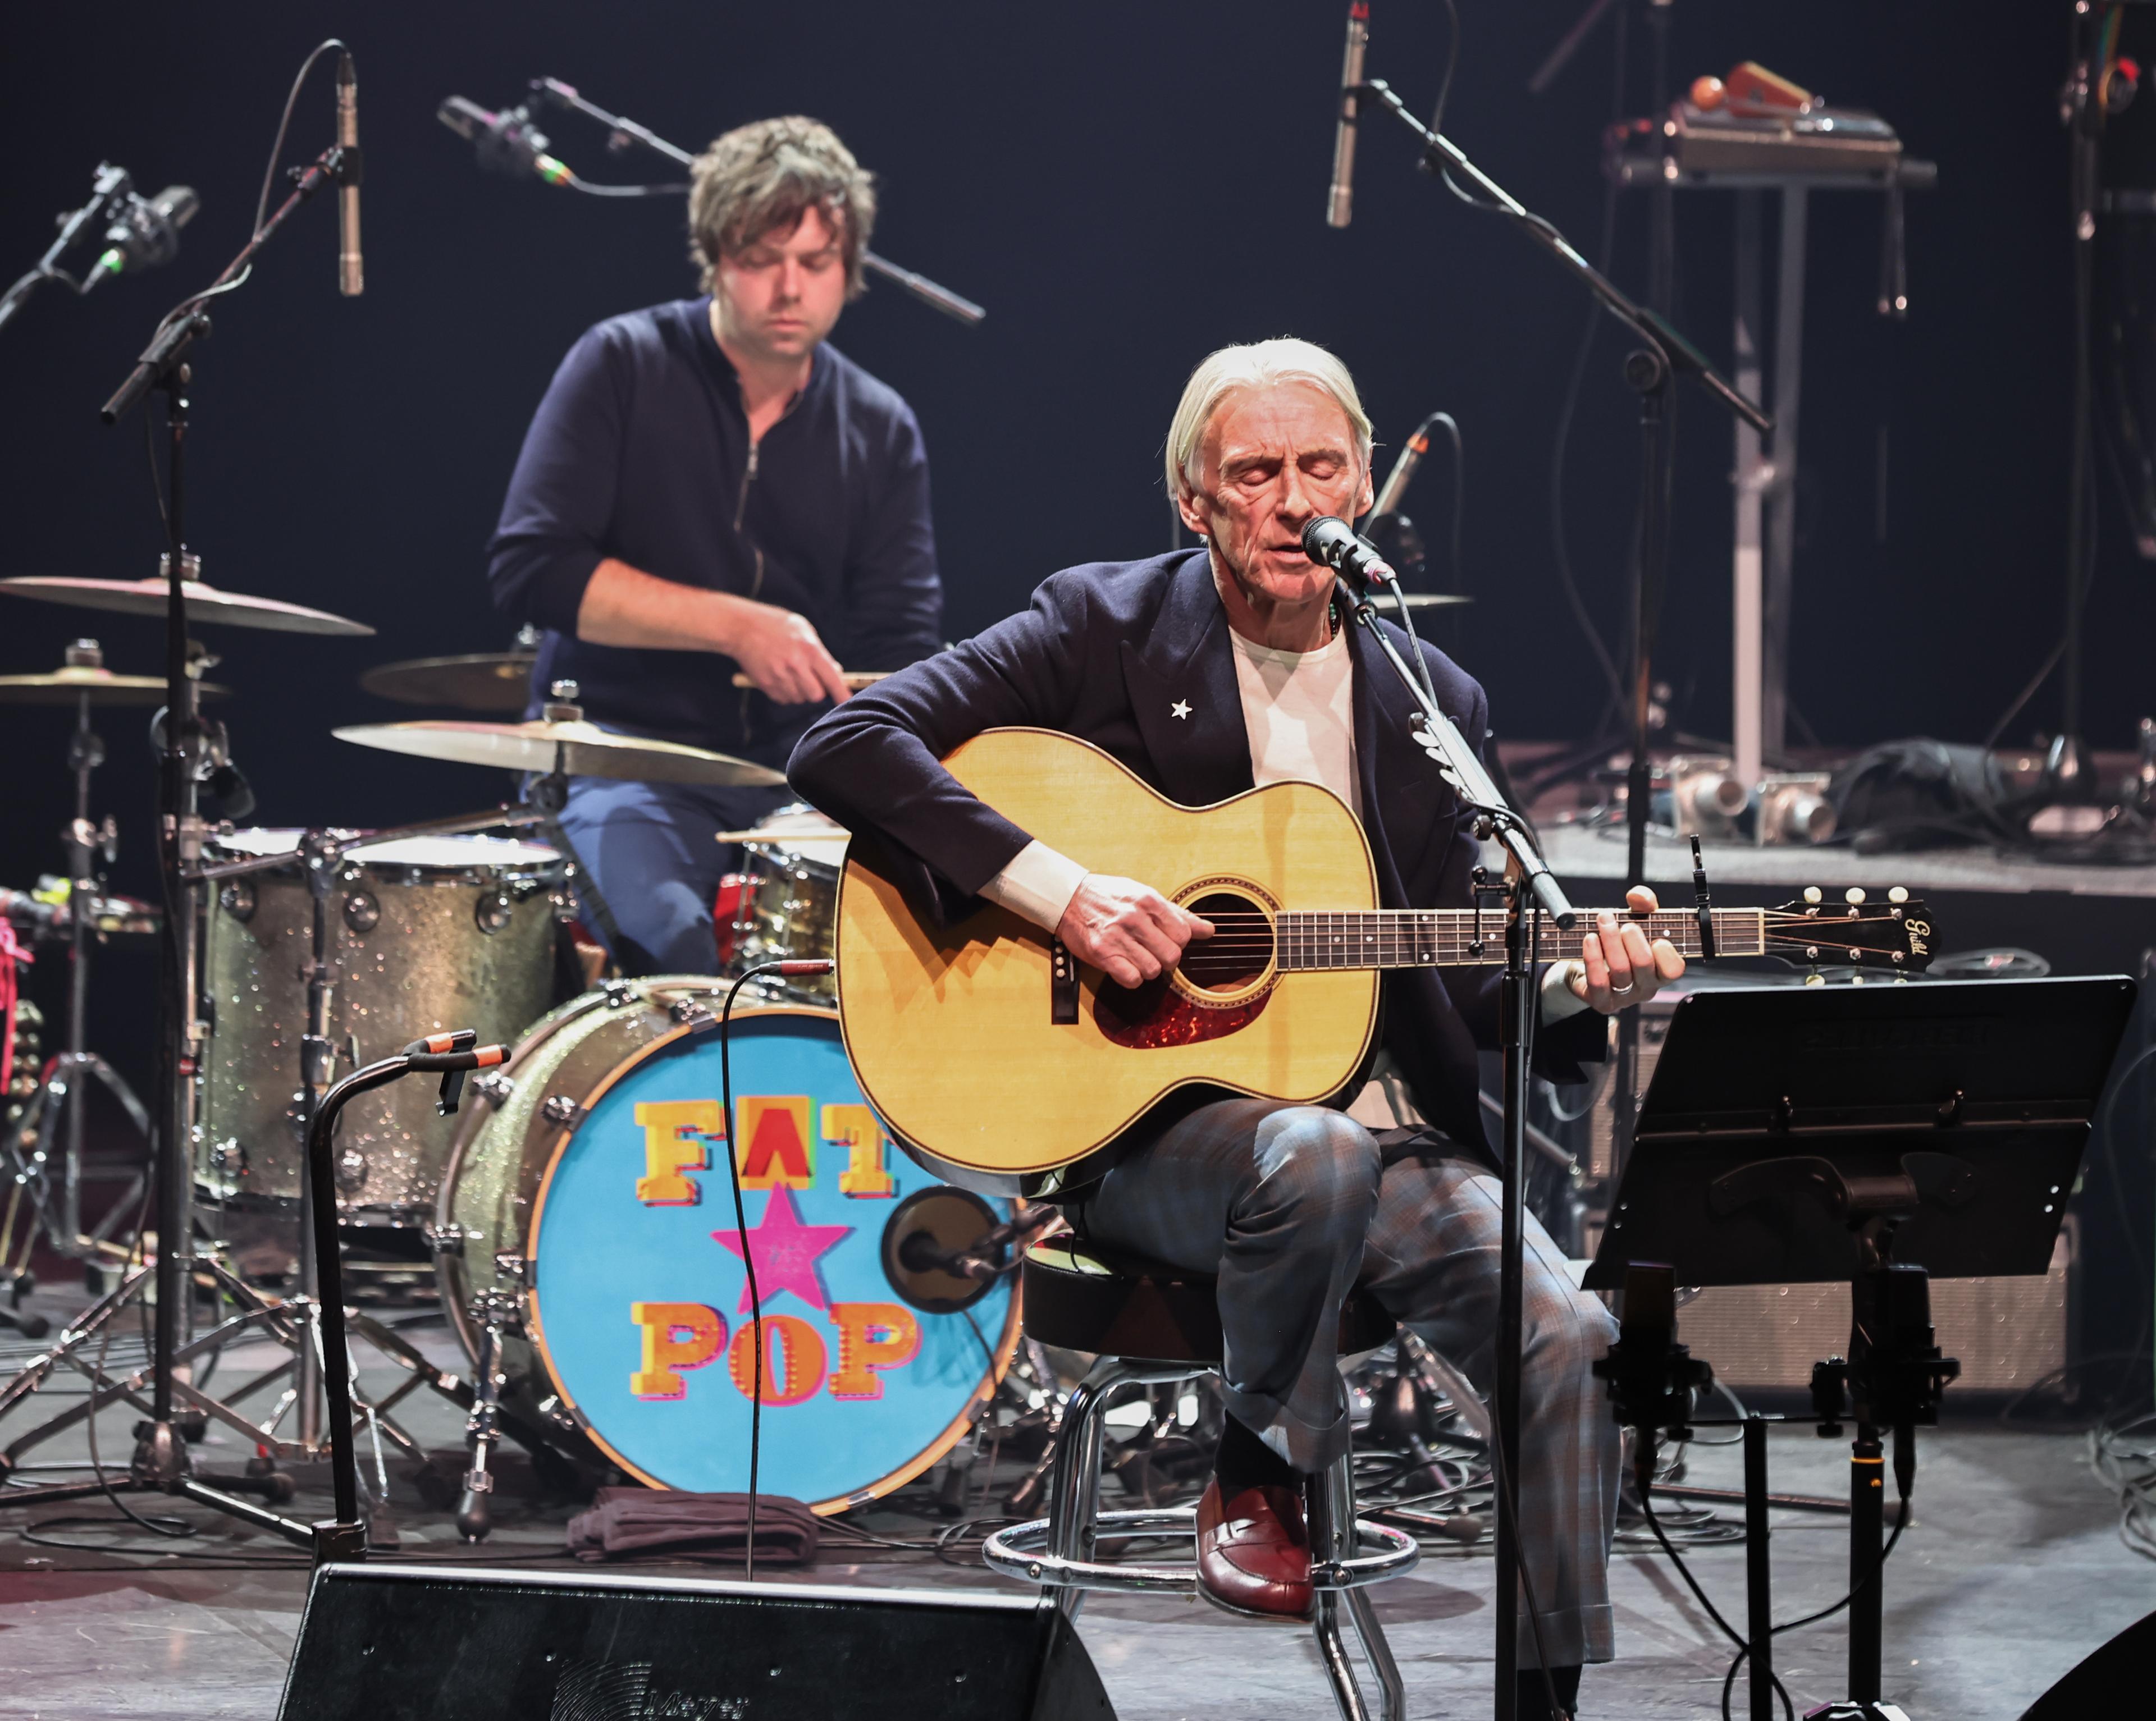 Paul Weller and band. Photo Credit: Sharon Latham